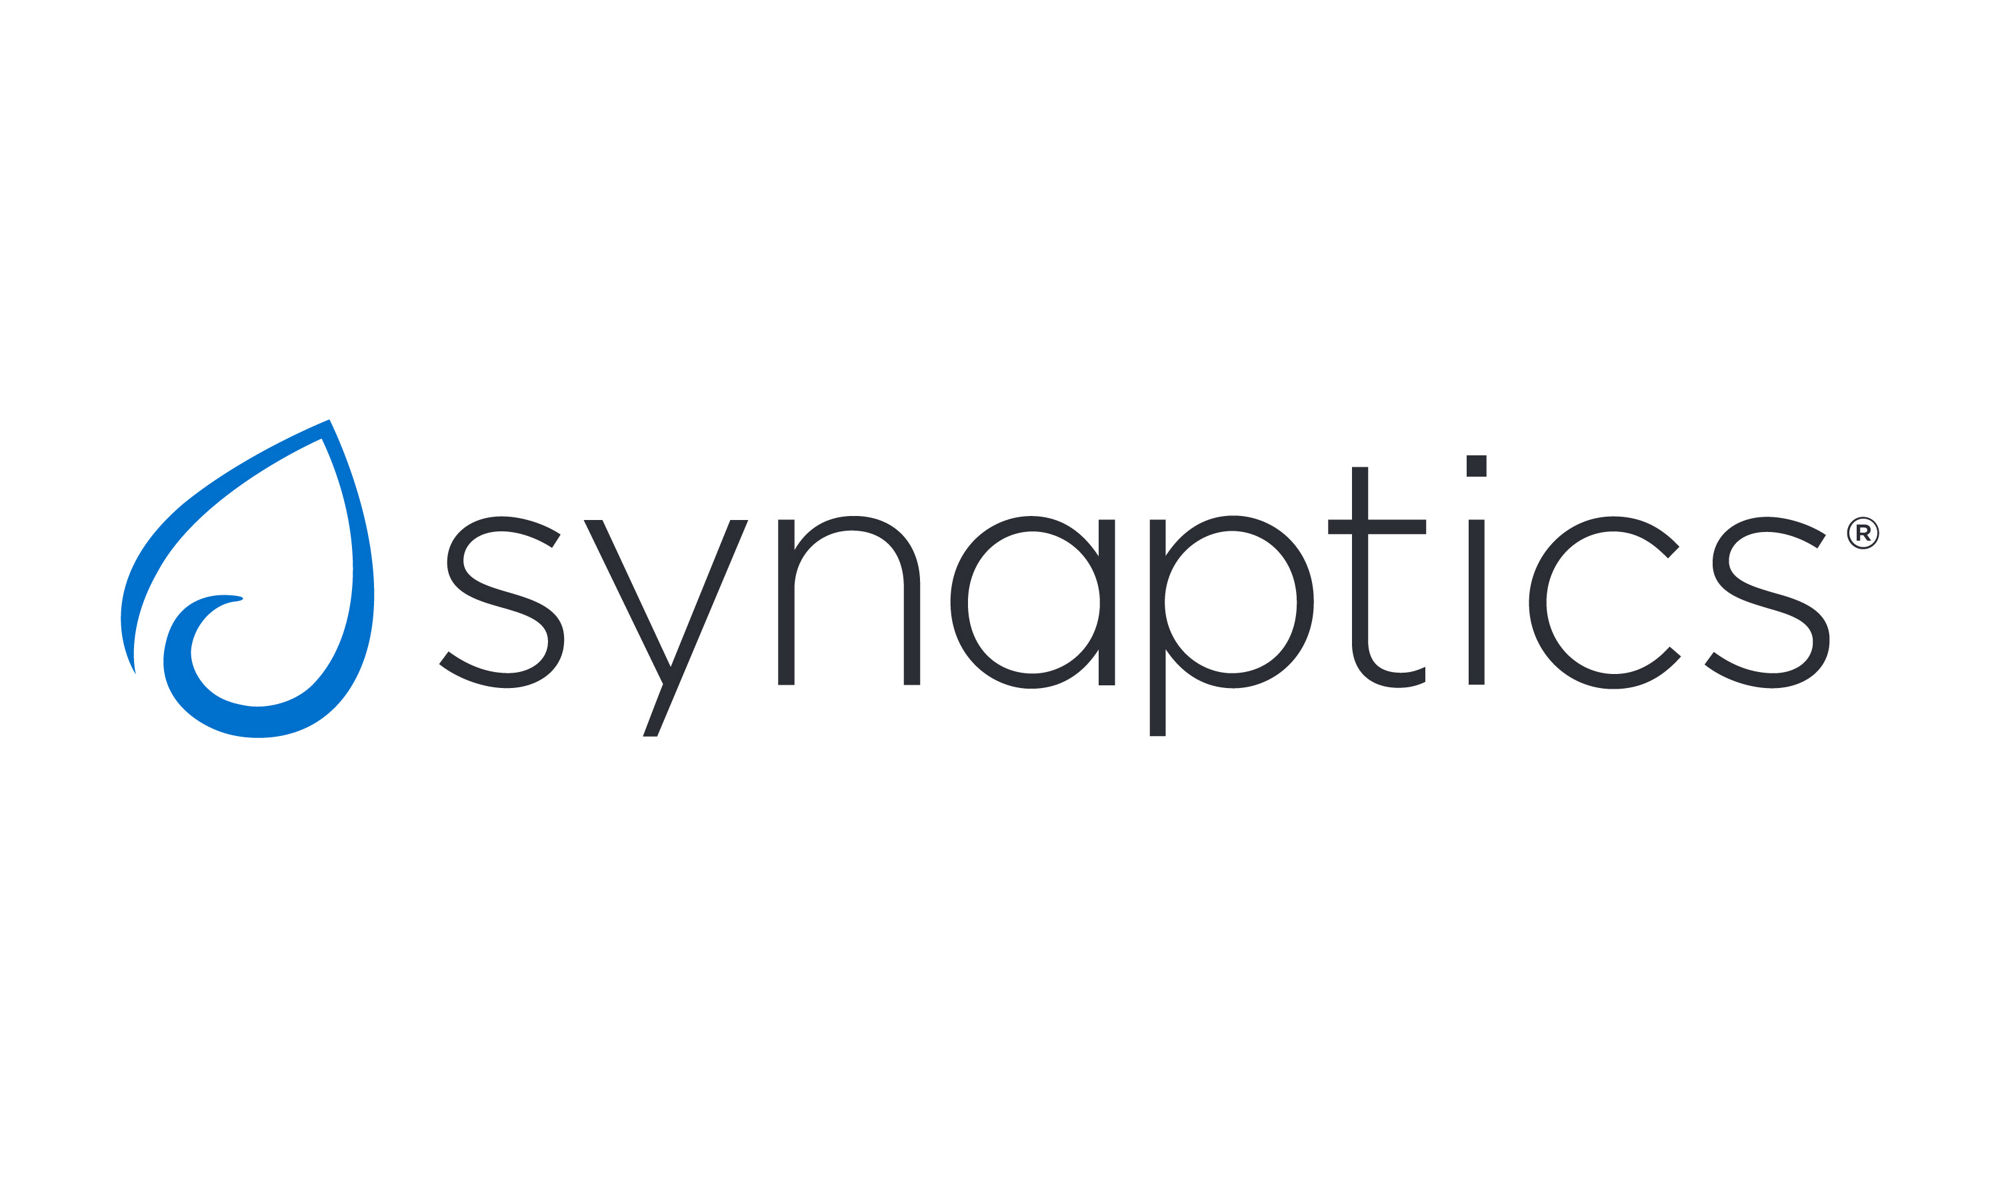 Synaptics logo